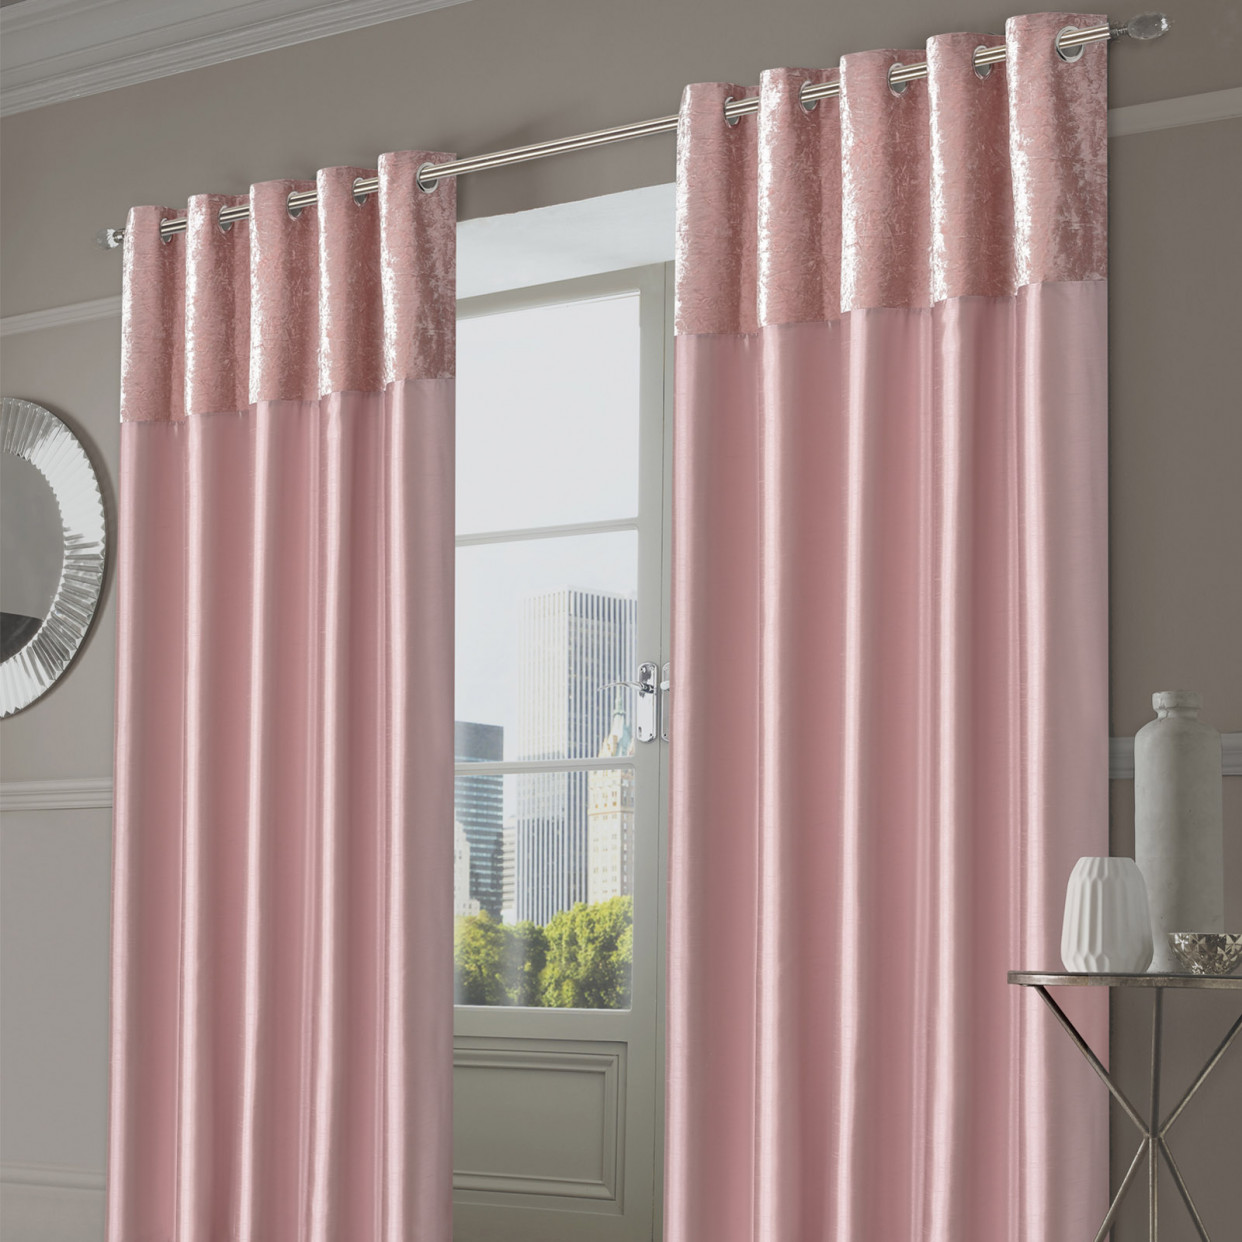 Sienna Home Manhattan Crushed Velvet Band Eyelet Curtains - Blush Pink, 66" x 90">